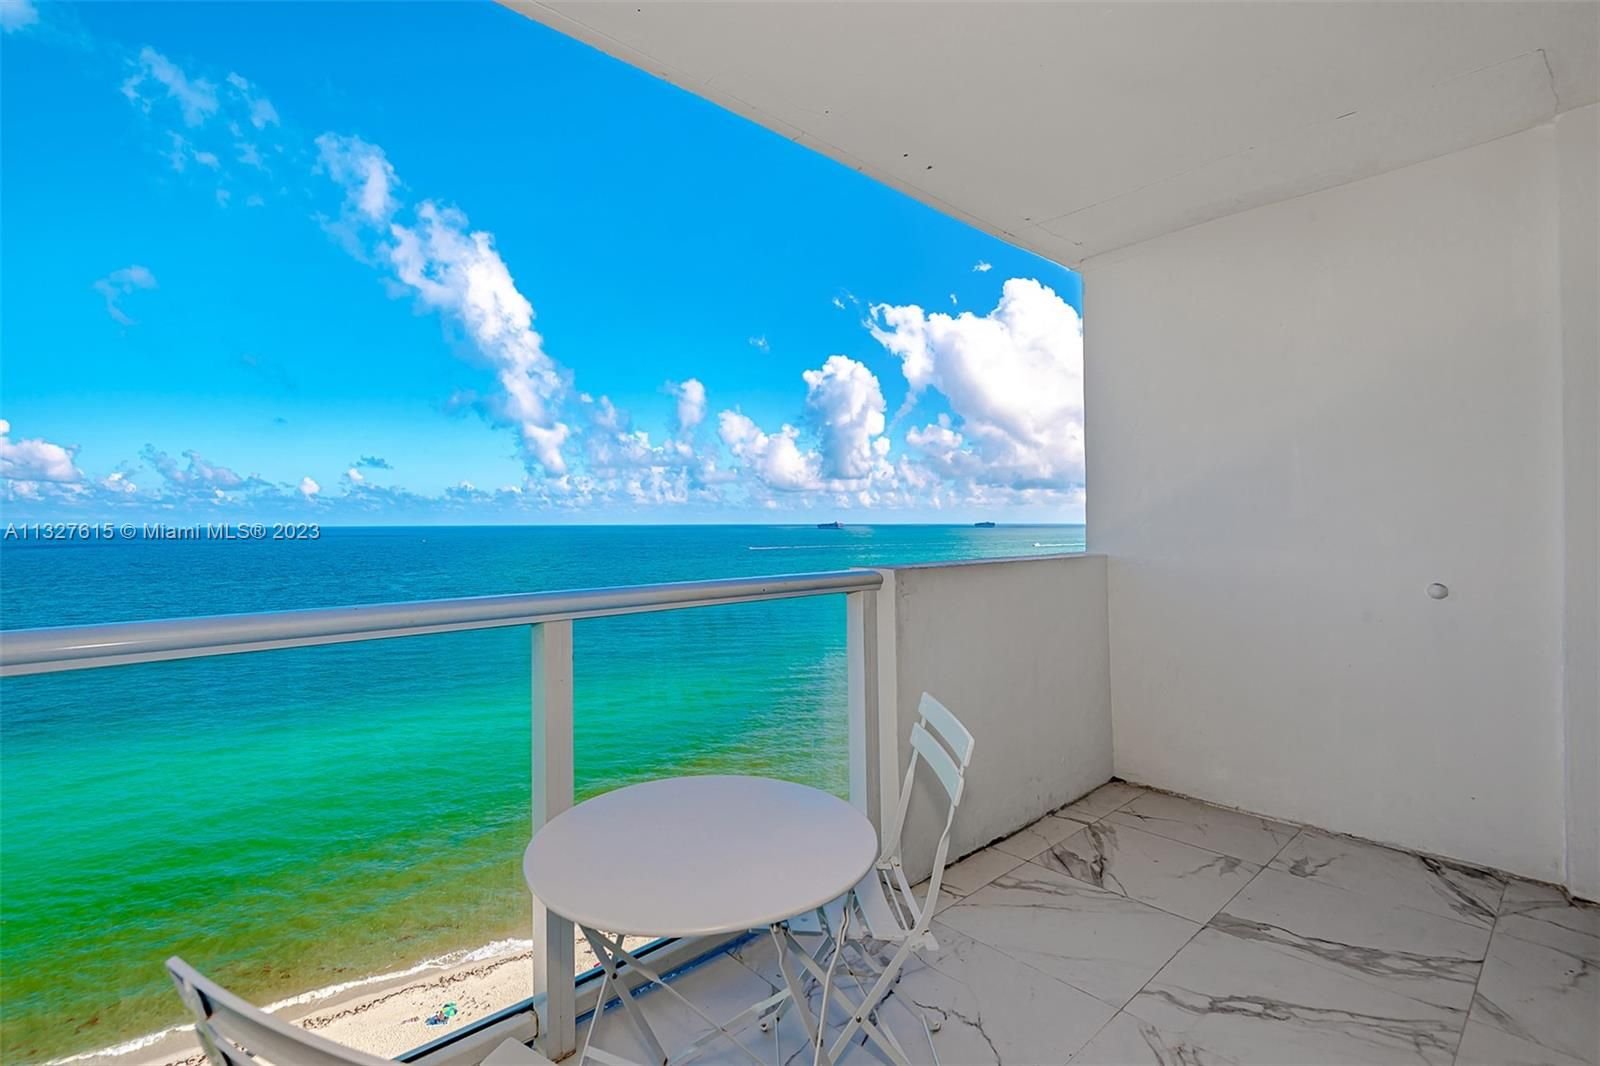 Real estate property located at 5445 Collins Ave #1729, Miami-Dade County, Miami Beach, FL